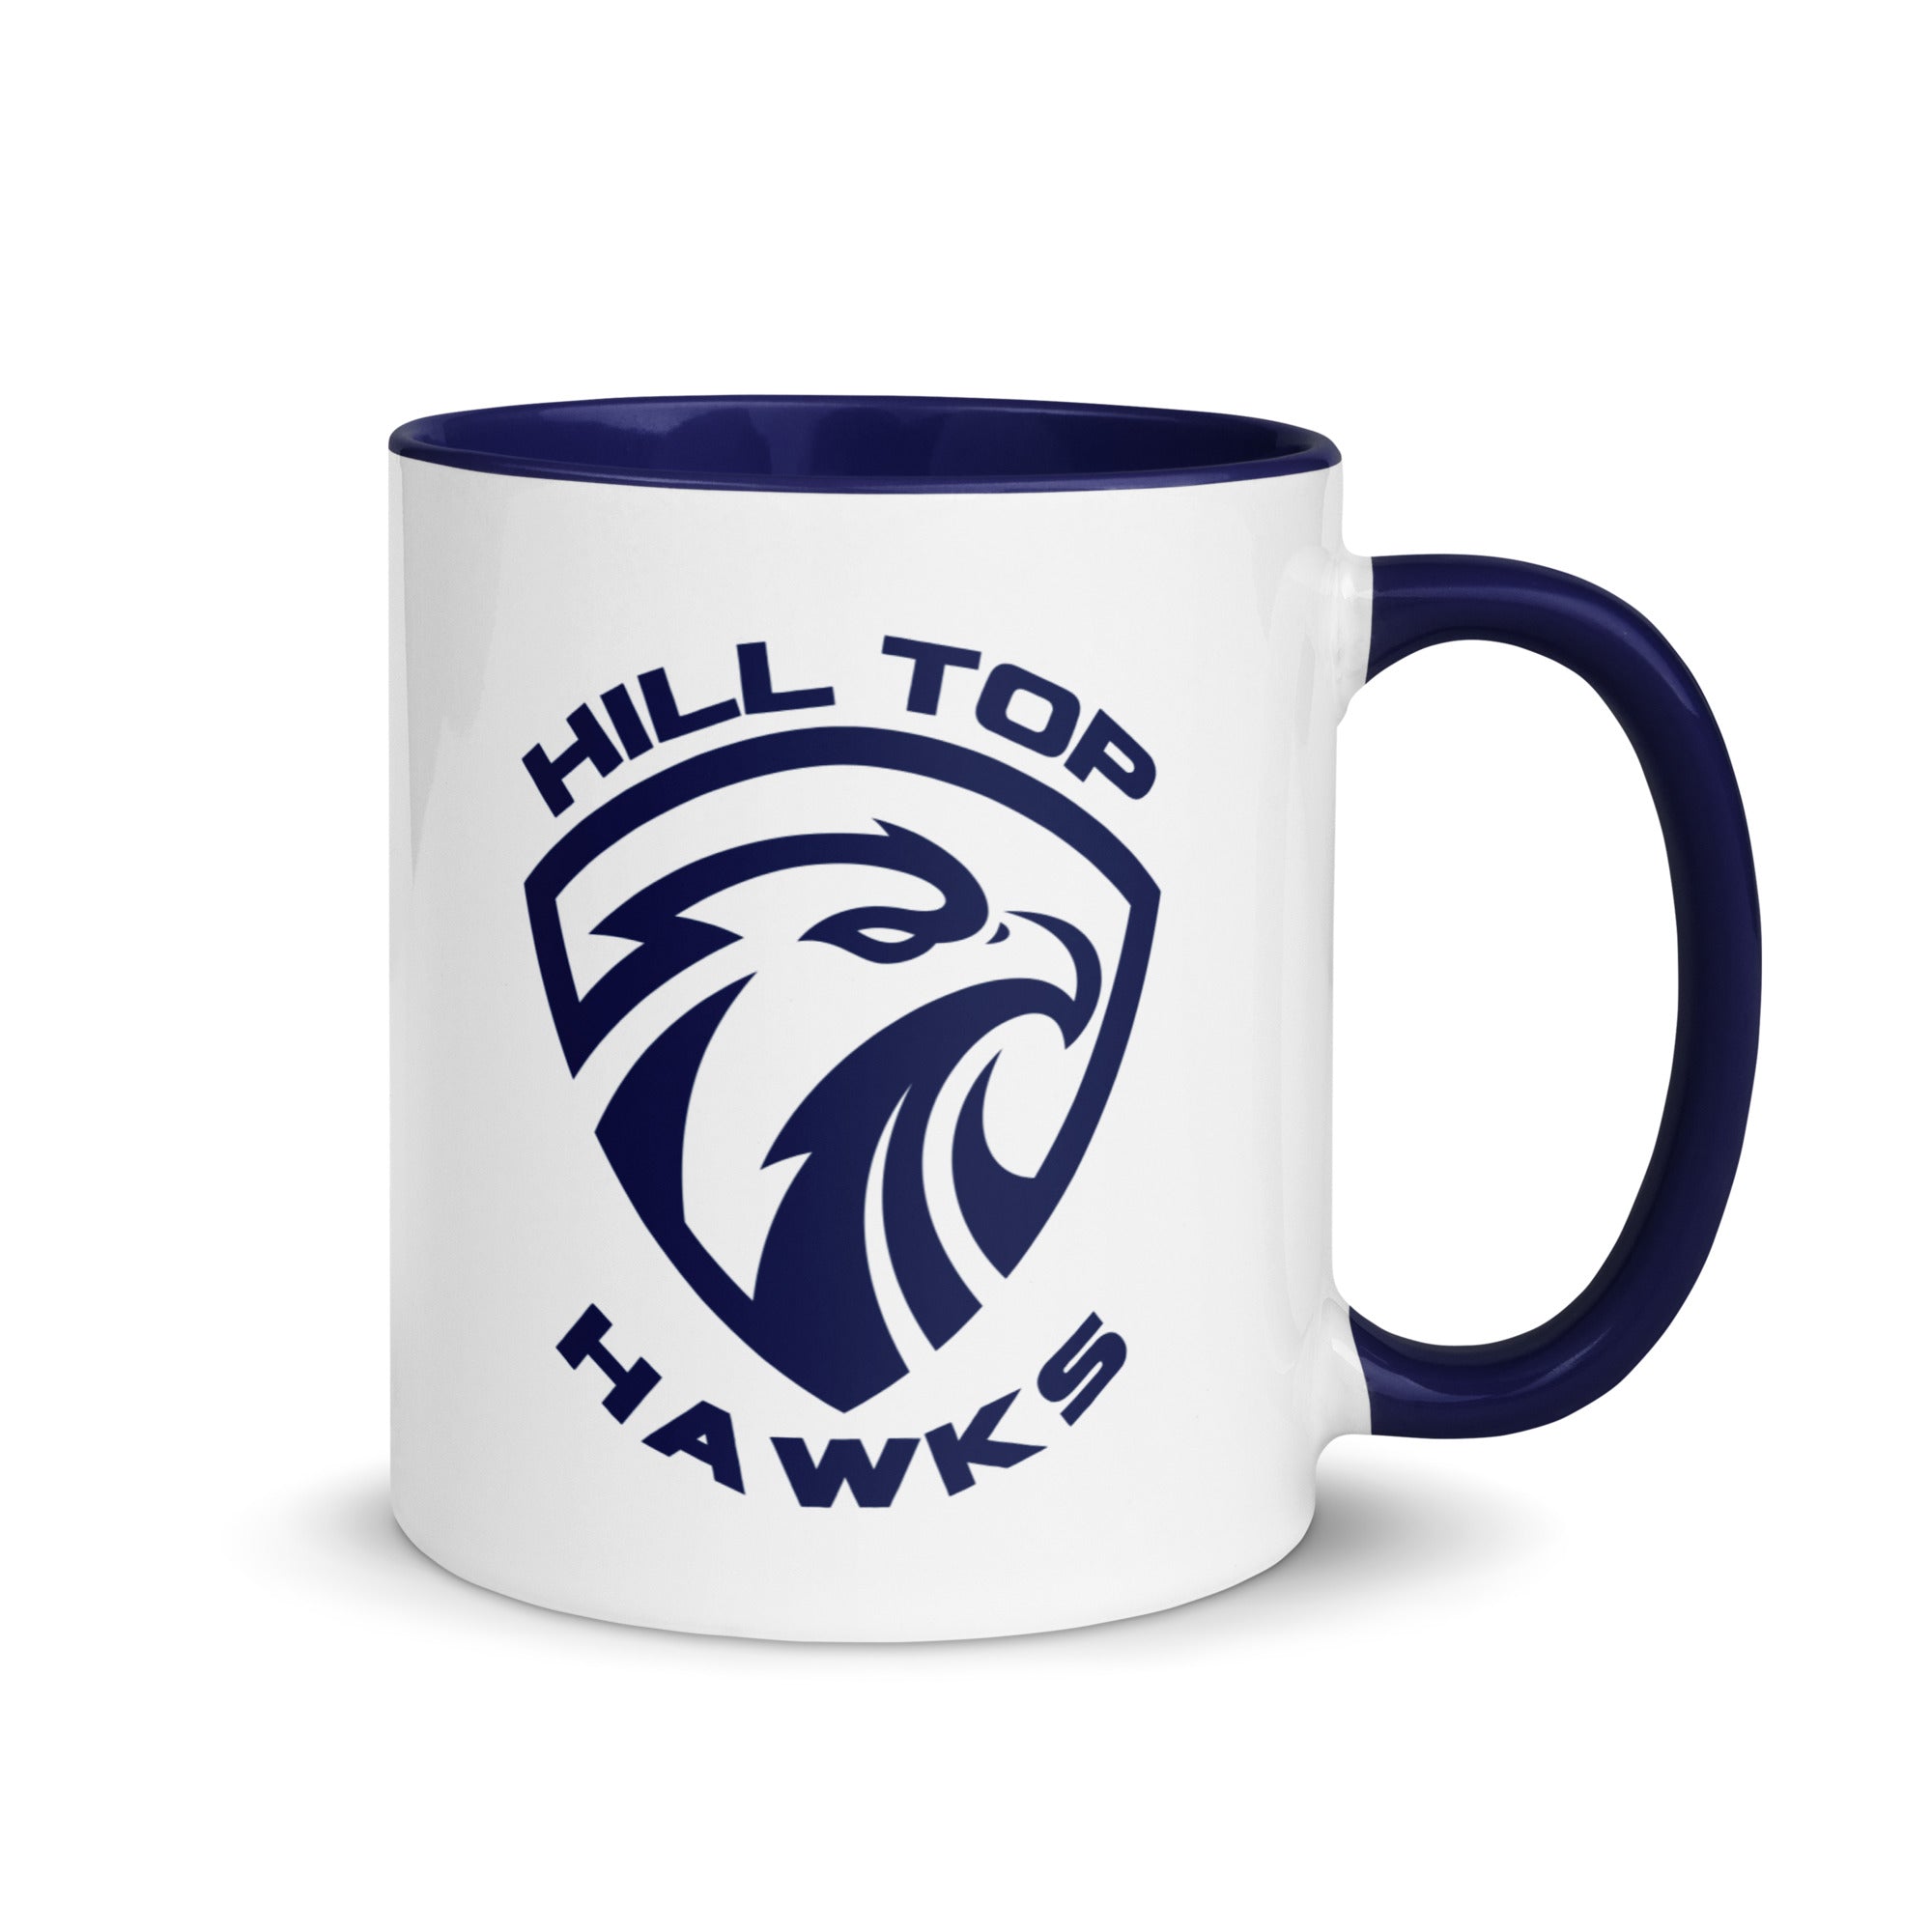 Hill Top Coffee Mug